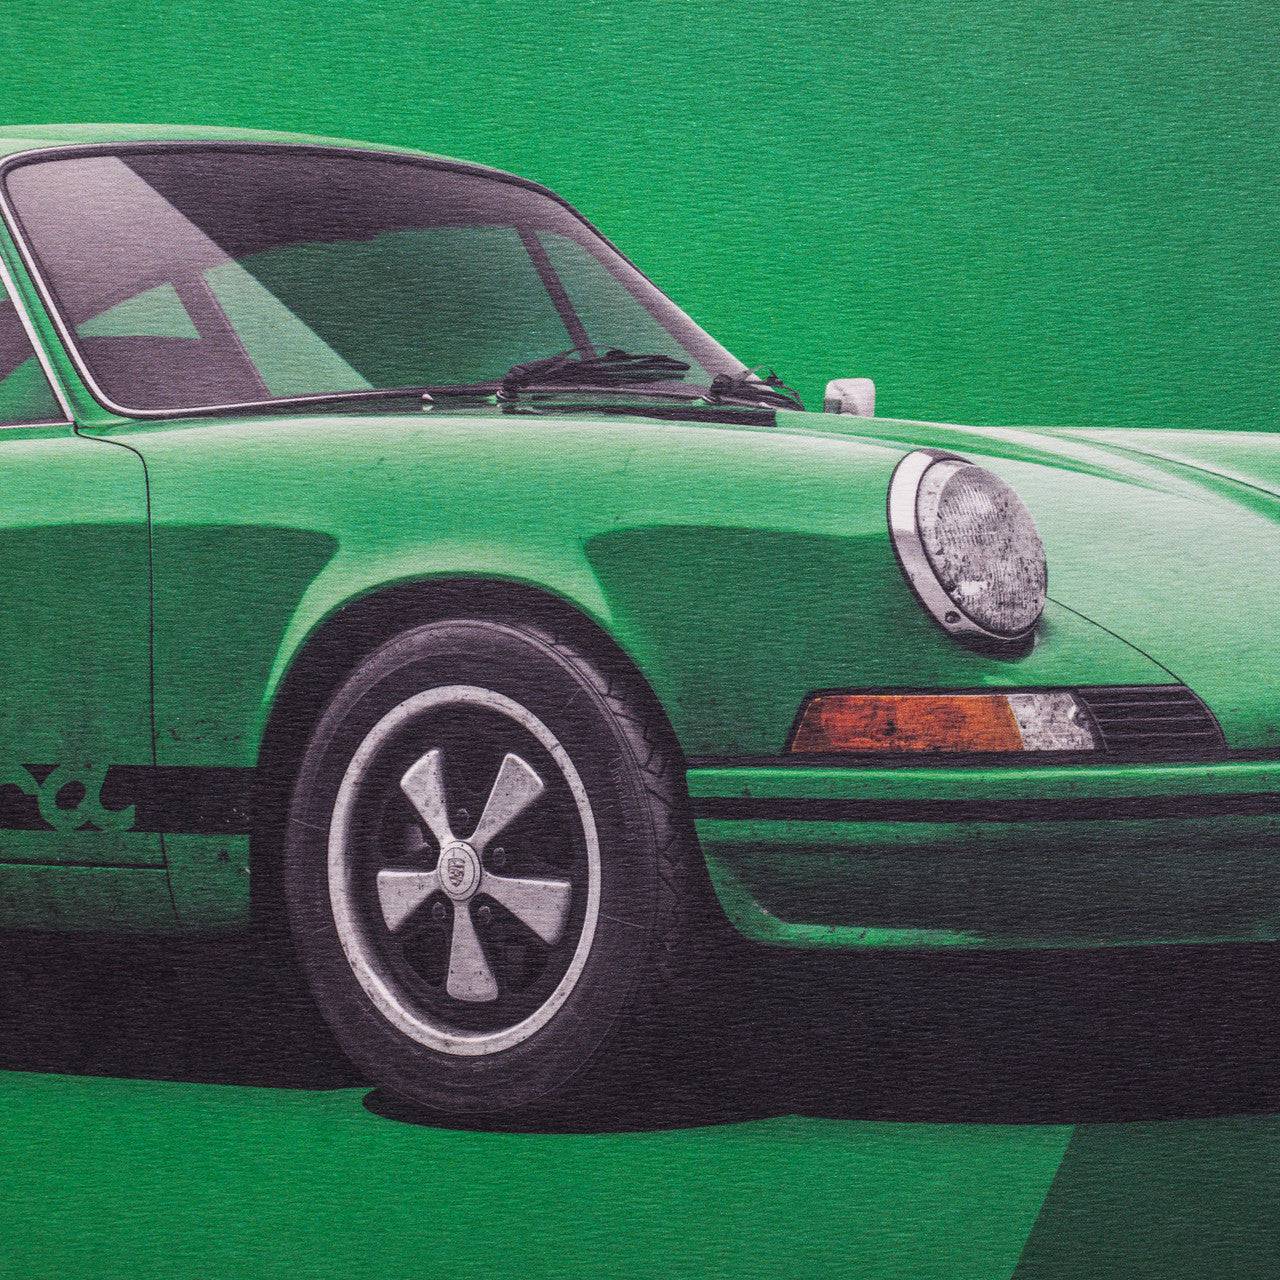 Porsche 911 RS - Green - Limited Poster